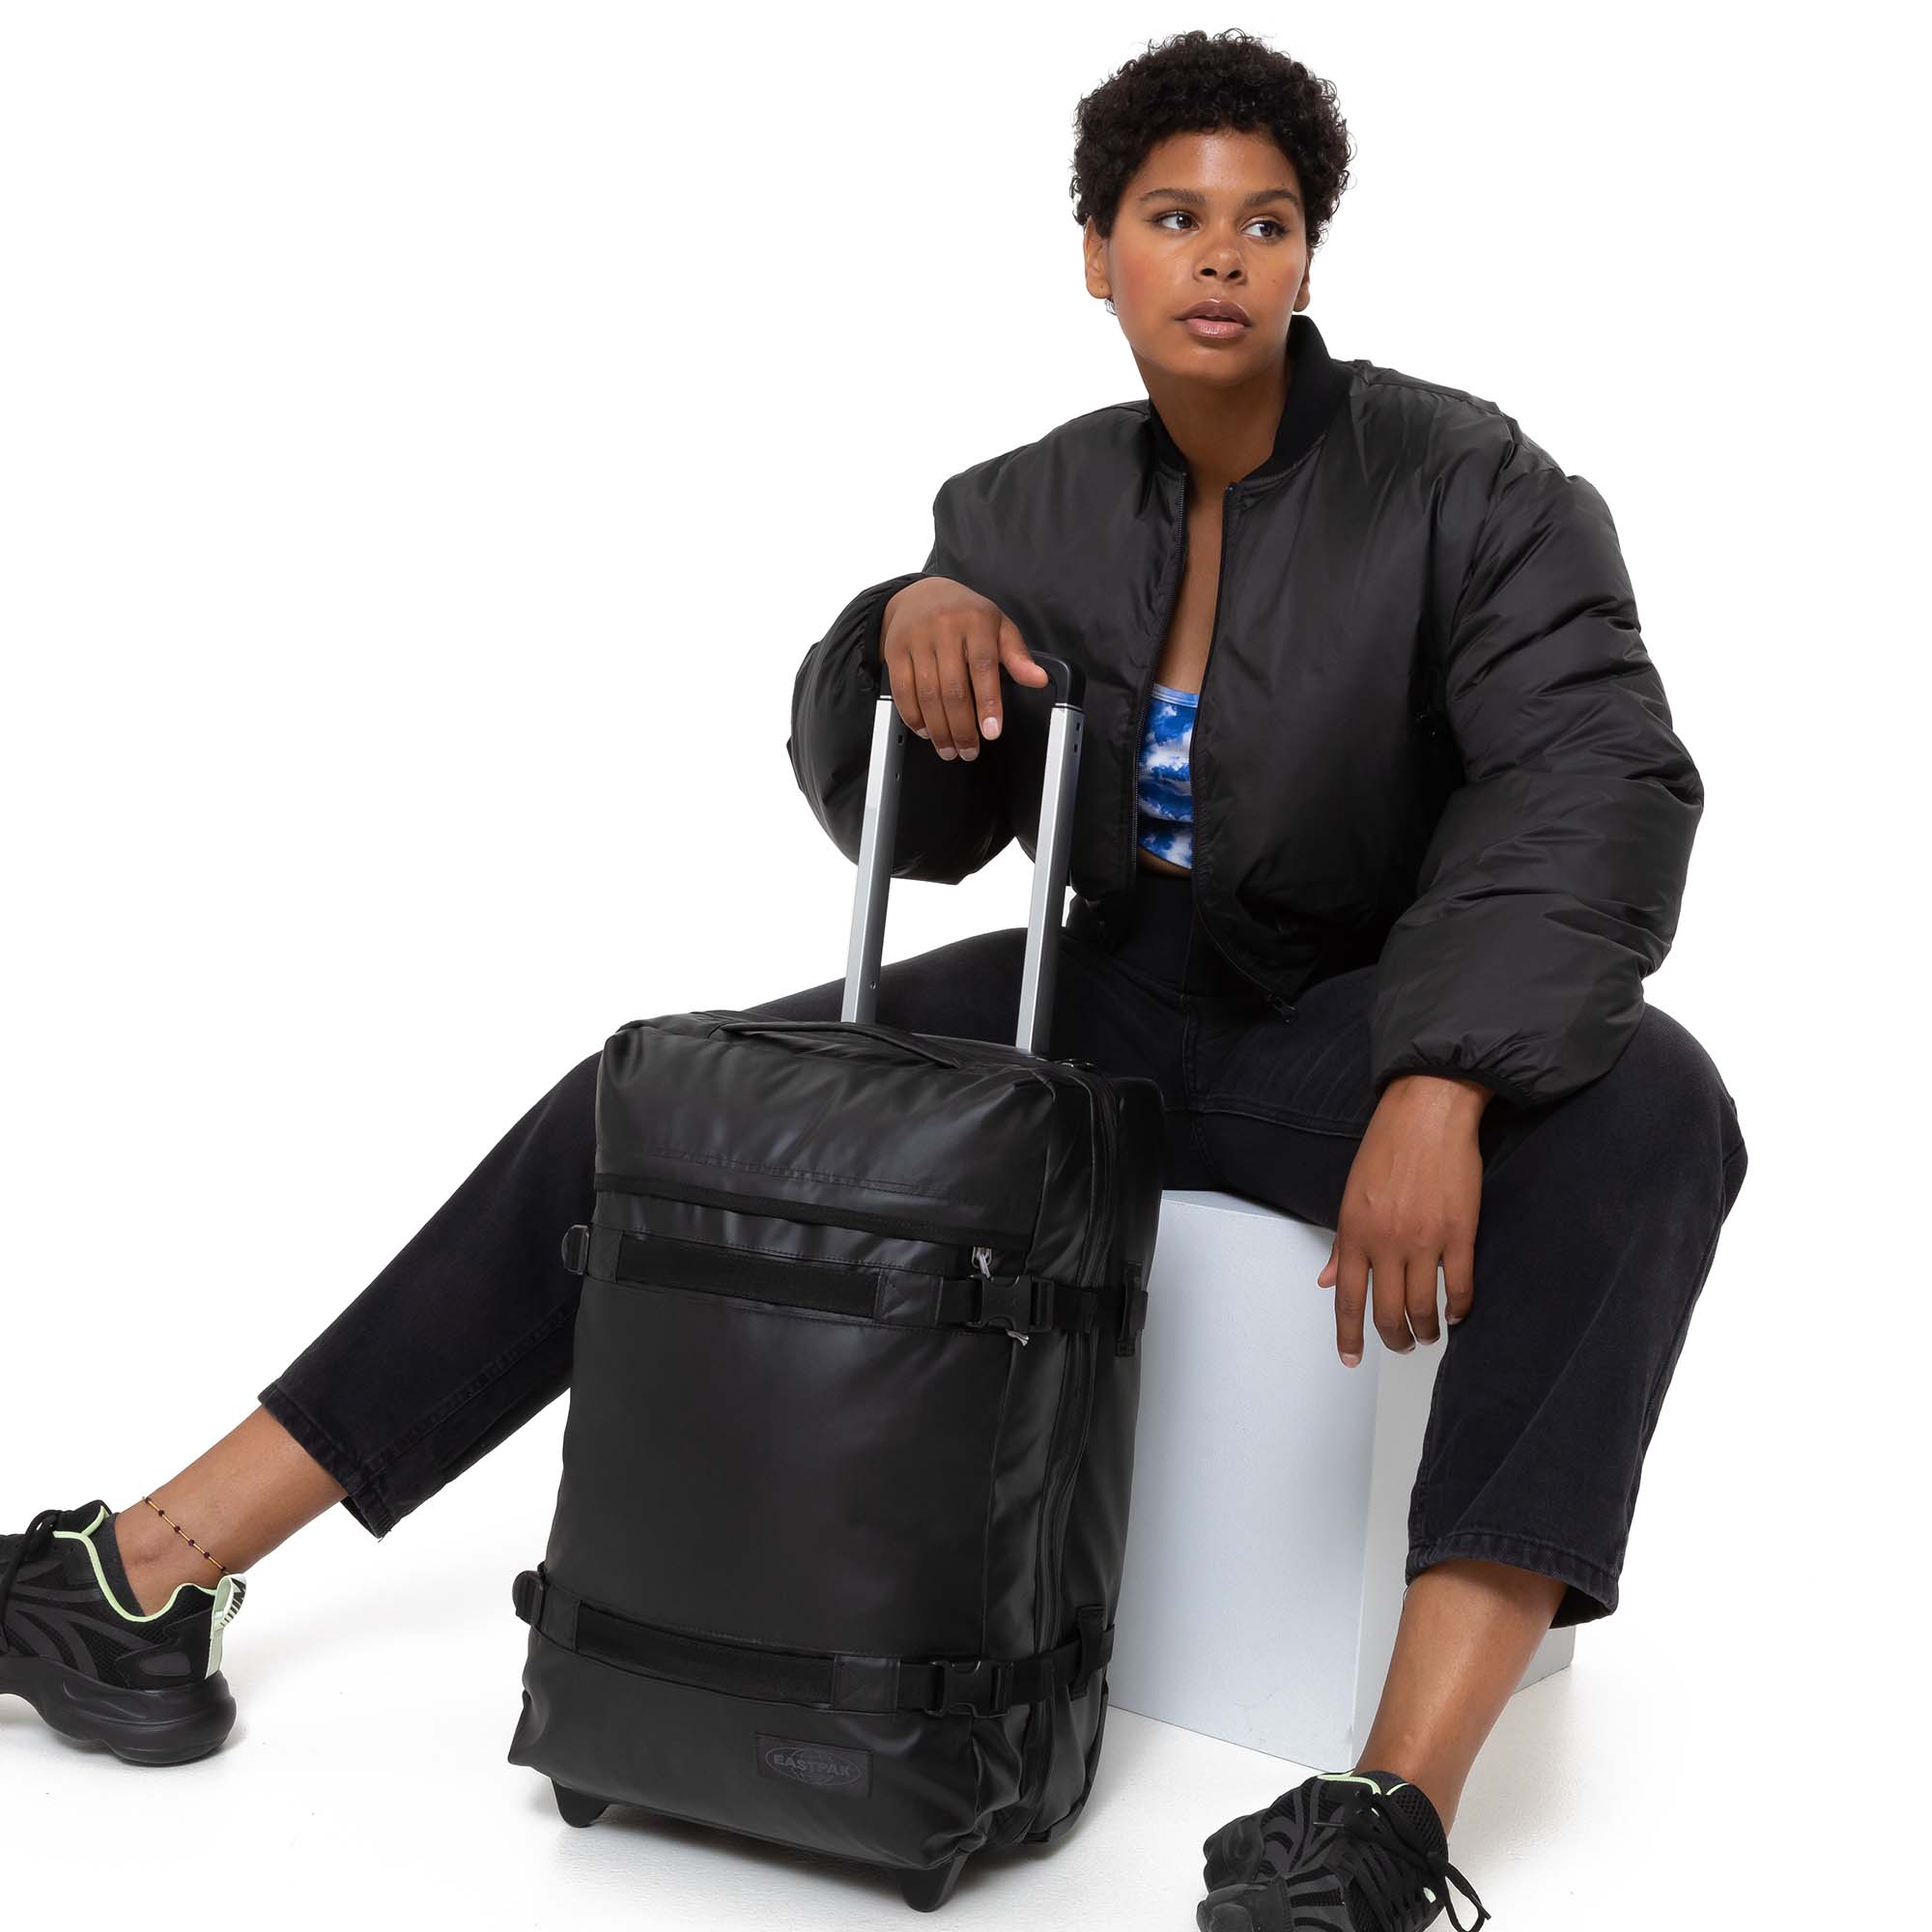 Eastpak Transit'R S 42 Wheeled Bag/Suitcase